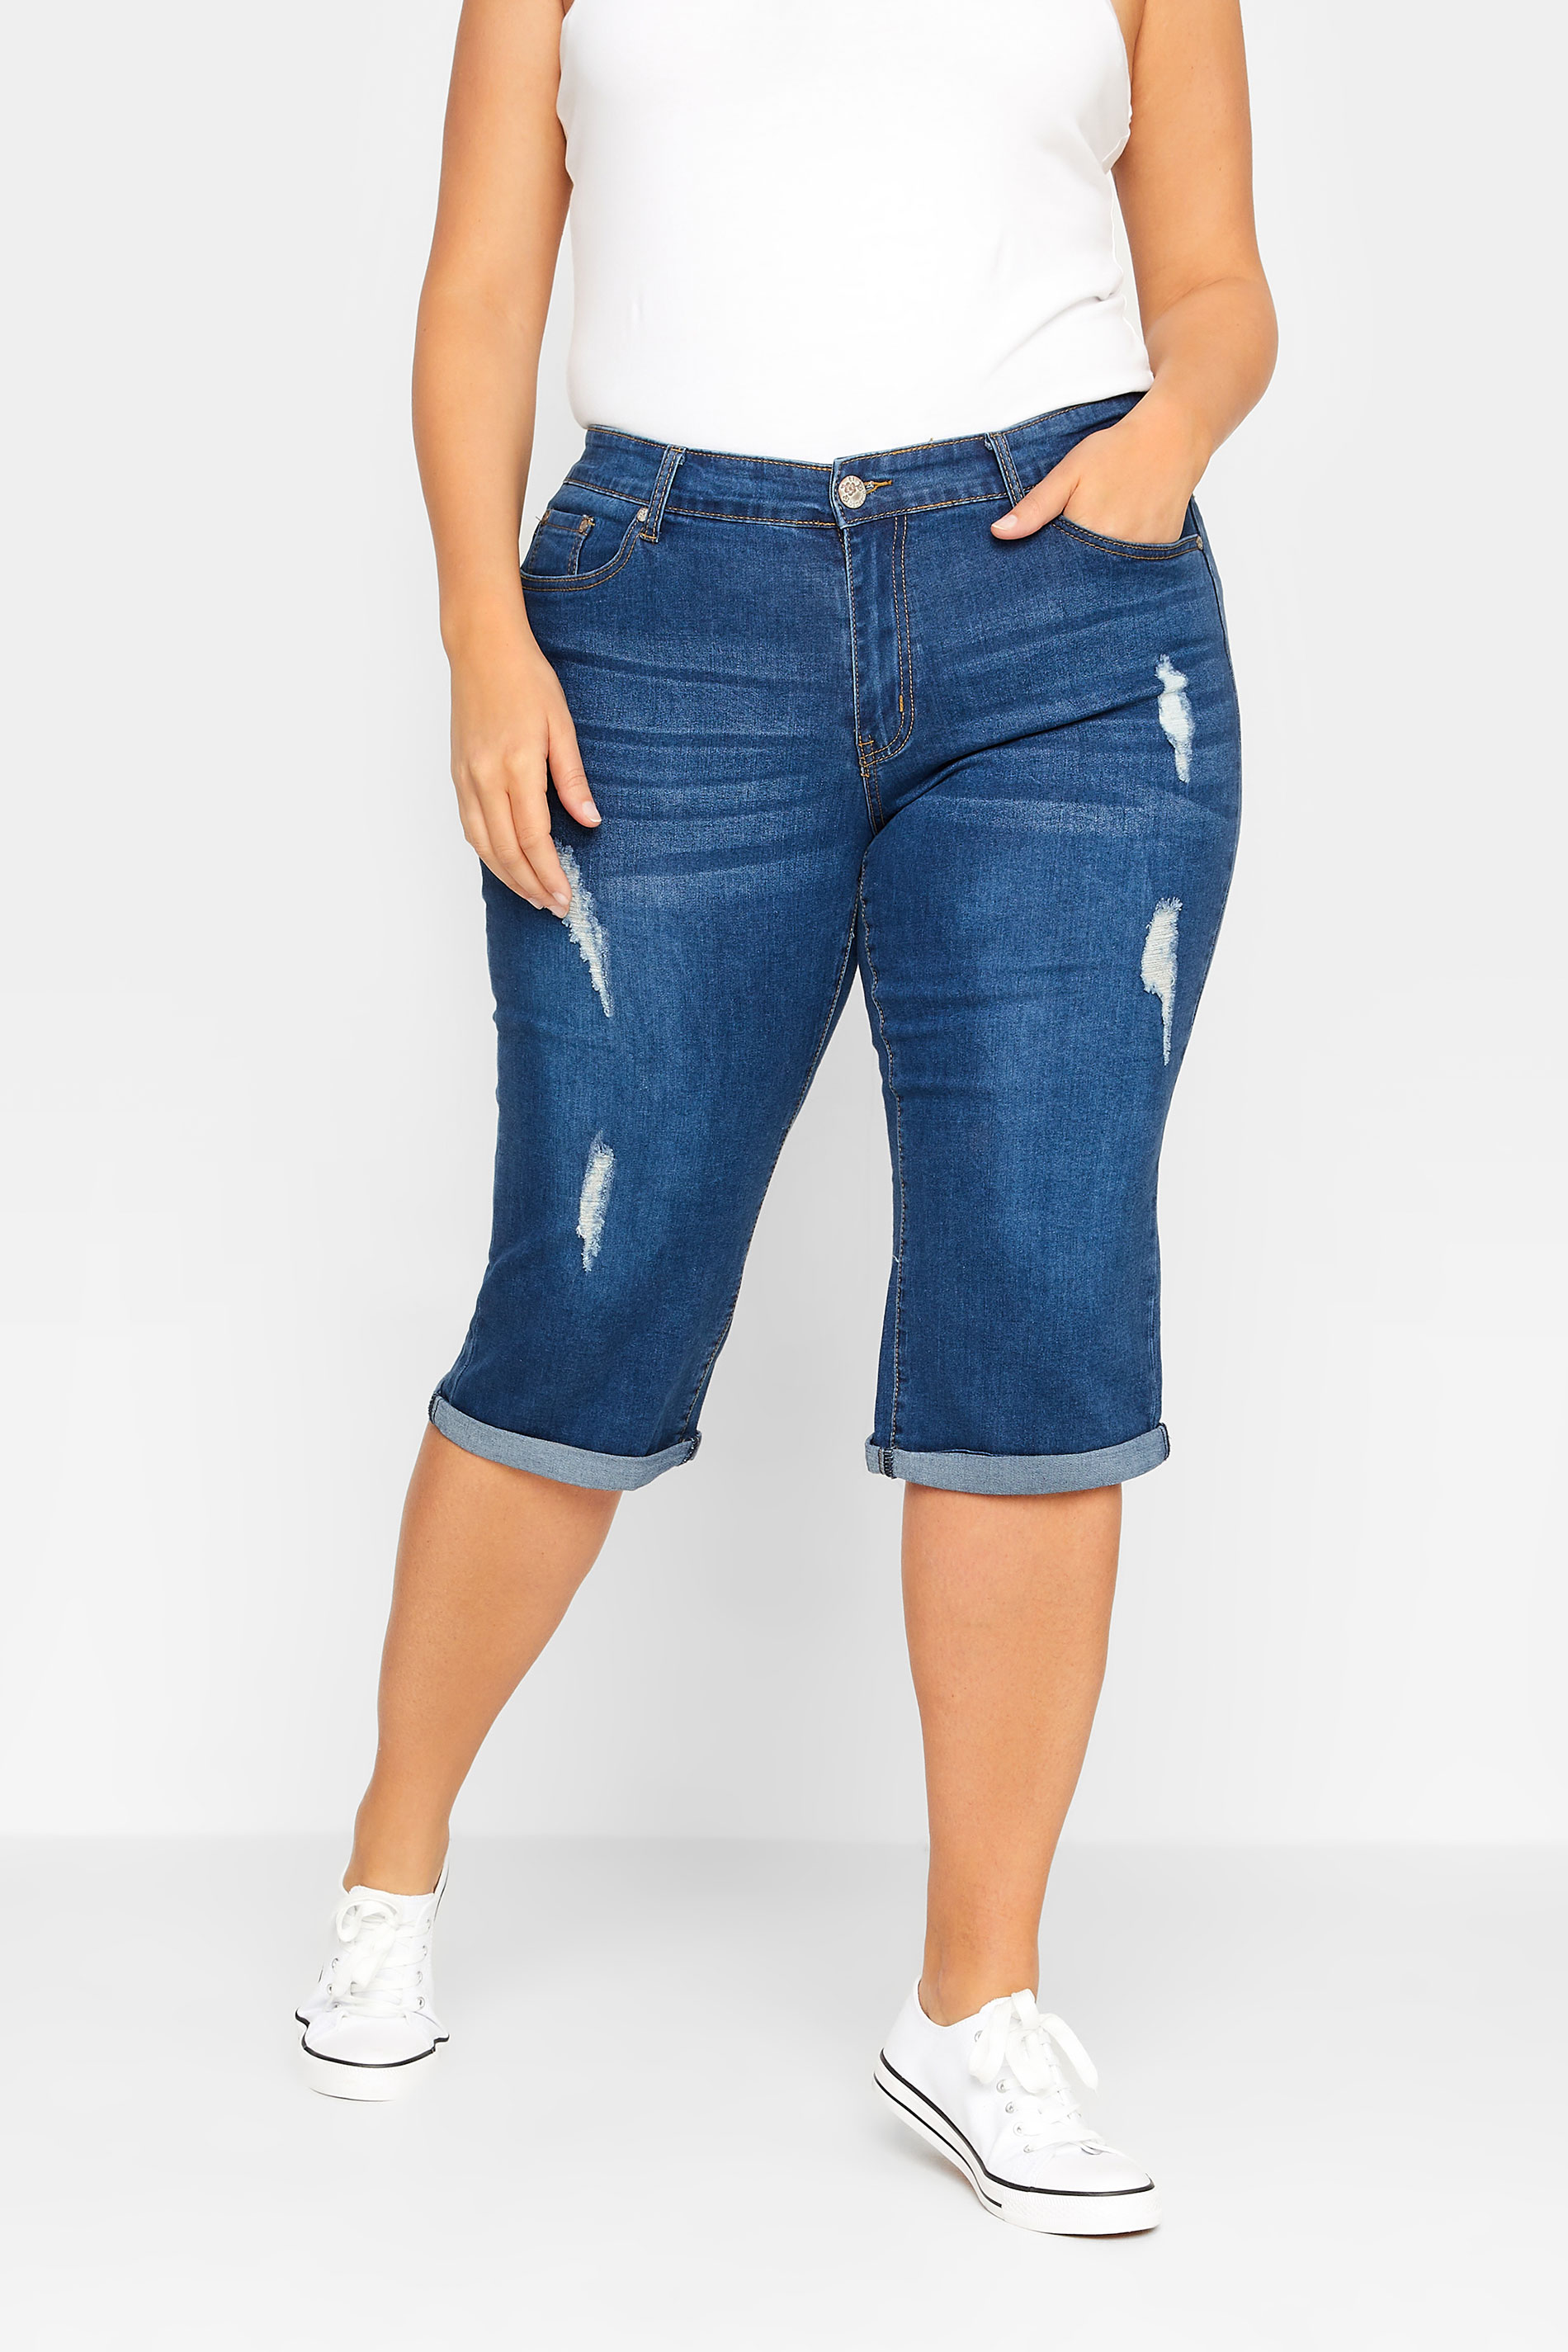 YOURS Plus Size Blue Distressed Denim Capri Shorts | Yours Clothing 1